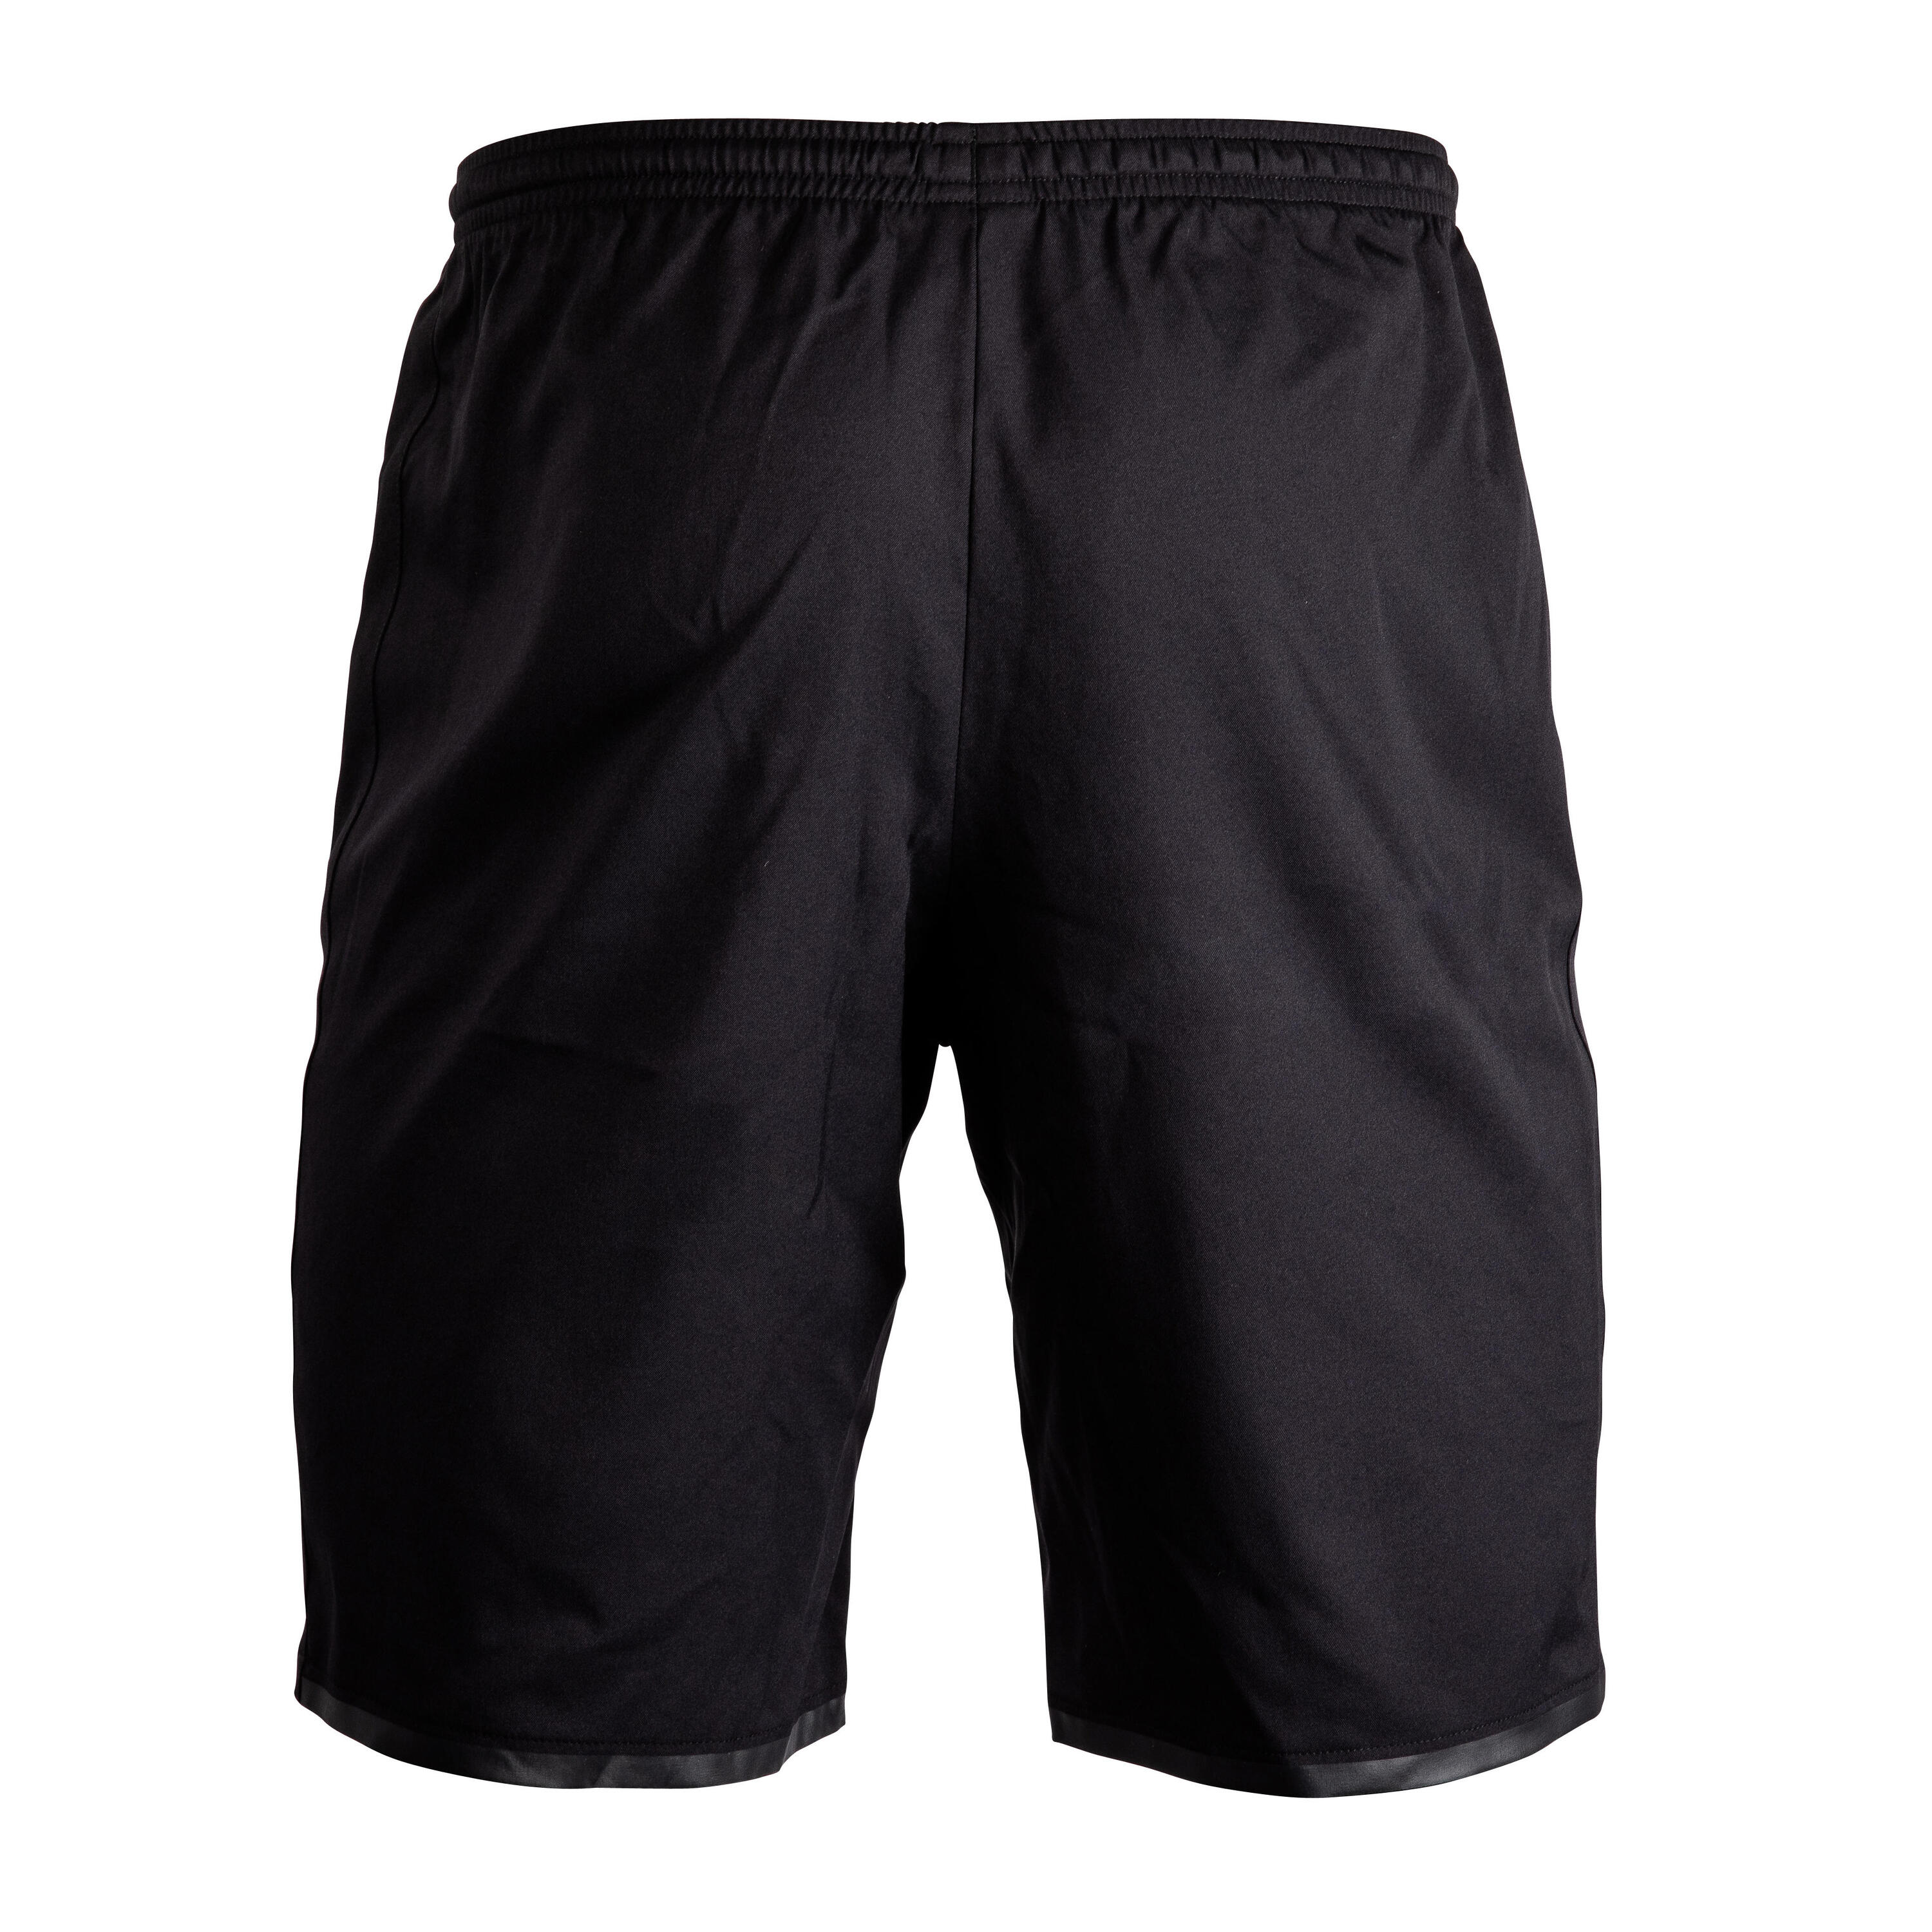 Adult Football Shorts with Zip Pockets Viralto Zip - Black/Grey 4/7